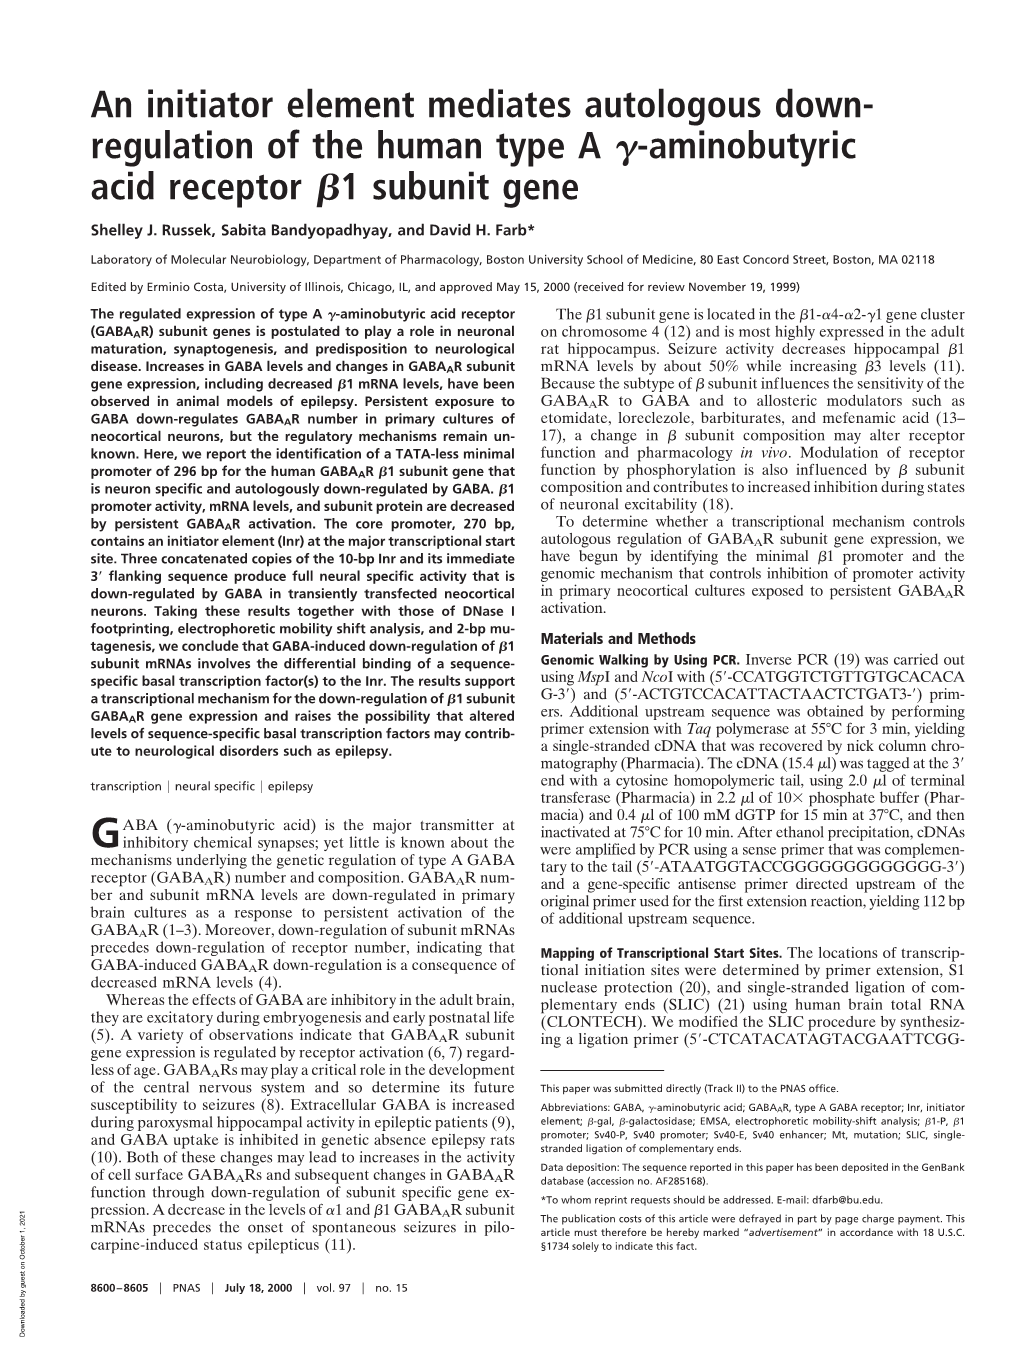 An Initiator Element Mediates Autologous Down- Regulation of the Human Type a ␥-Aminobutyric Acid Receptor ␤1 Subunit Gene